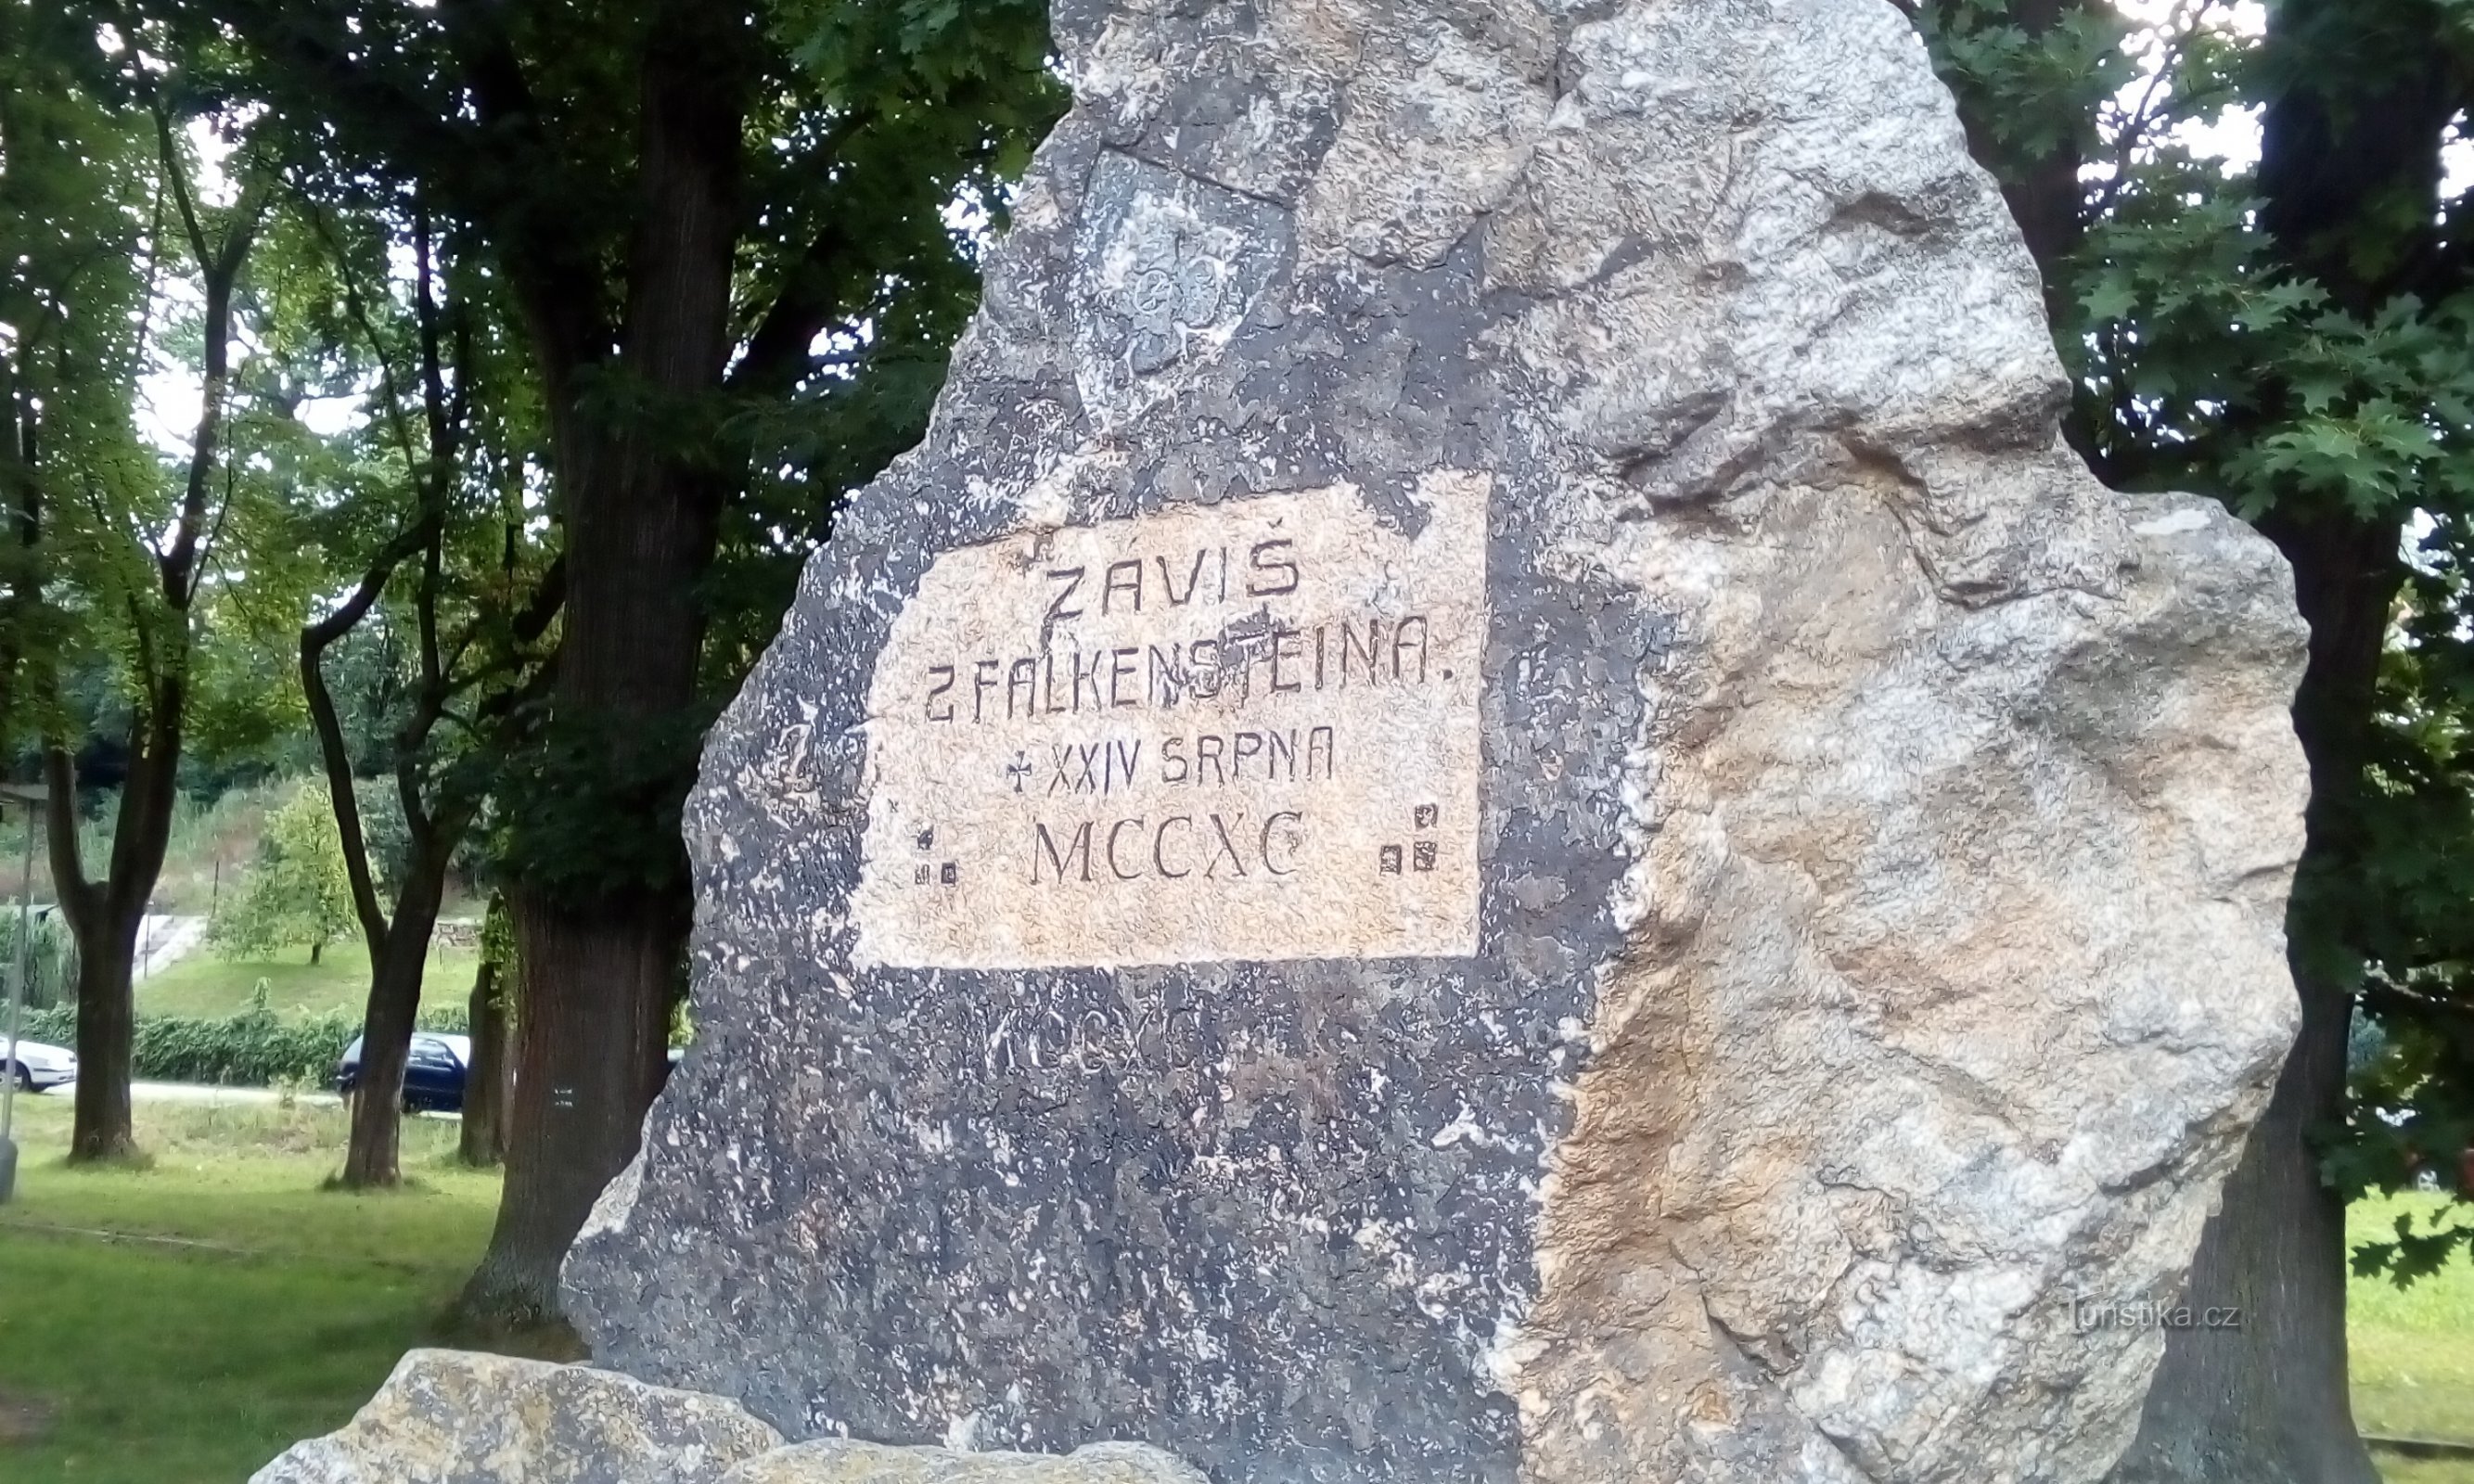 Monumento a Závis da Falkenstein